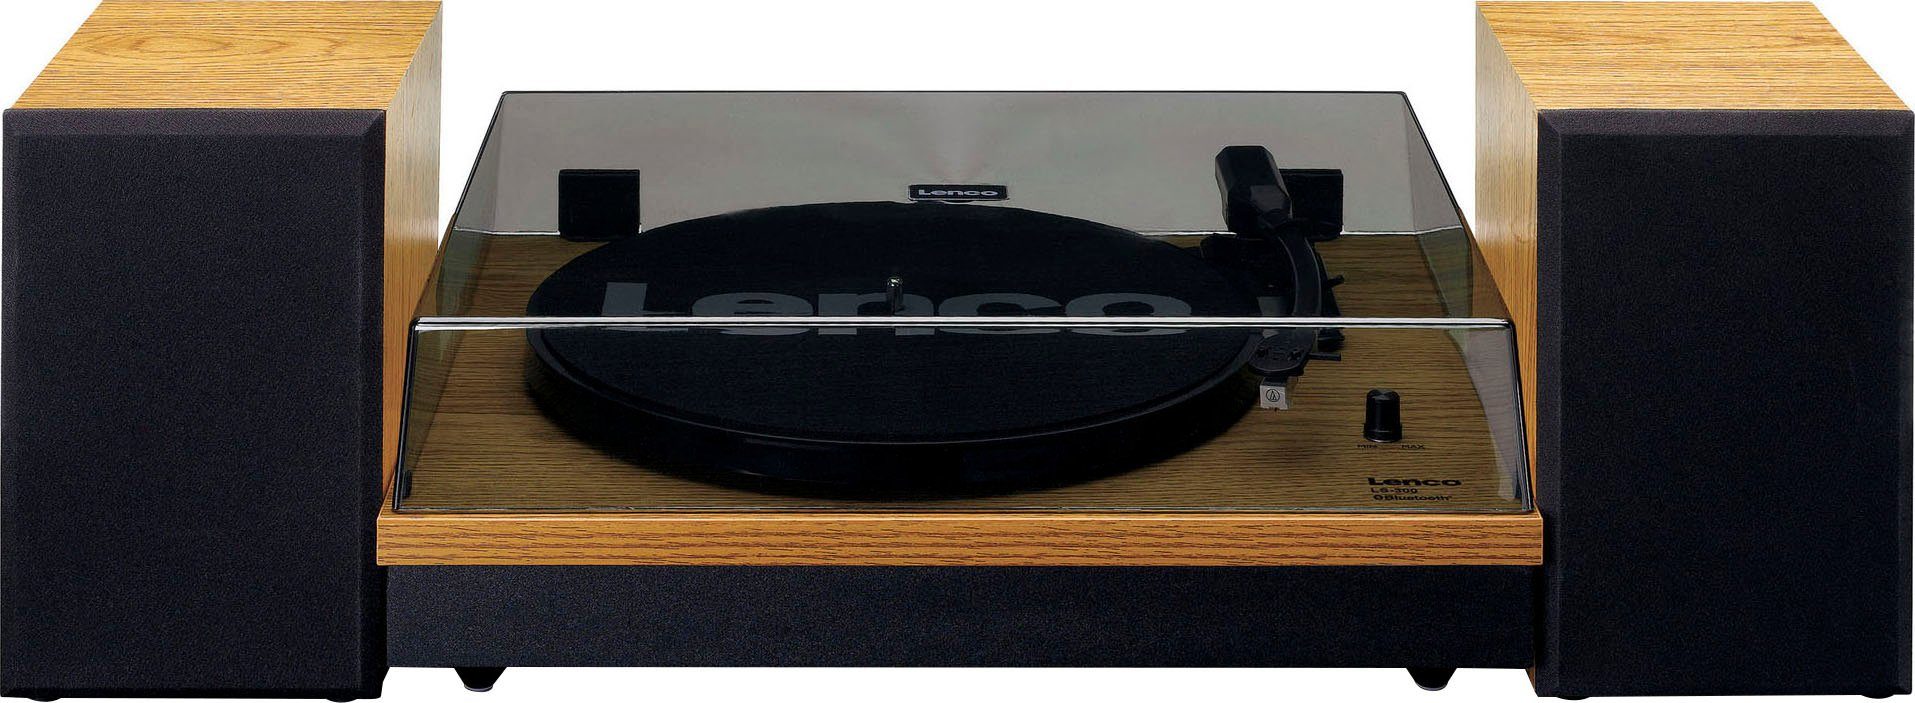 Lenco LS-300WD Plattenspieler Plattenspieler (Riemenantrieb) mit Lautsprechern ext. Holz